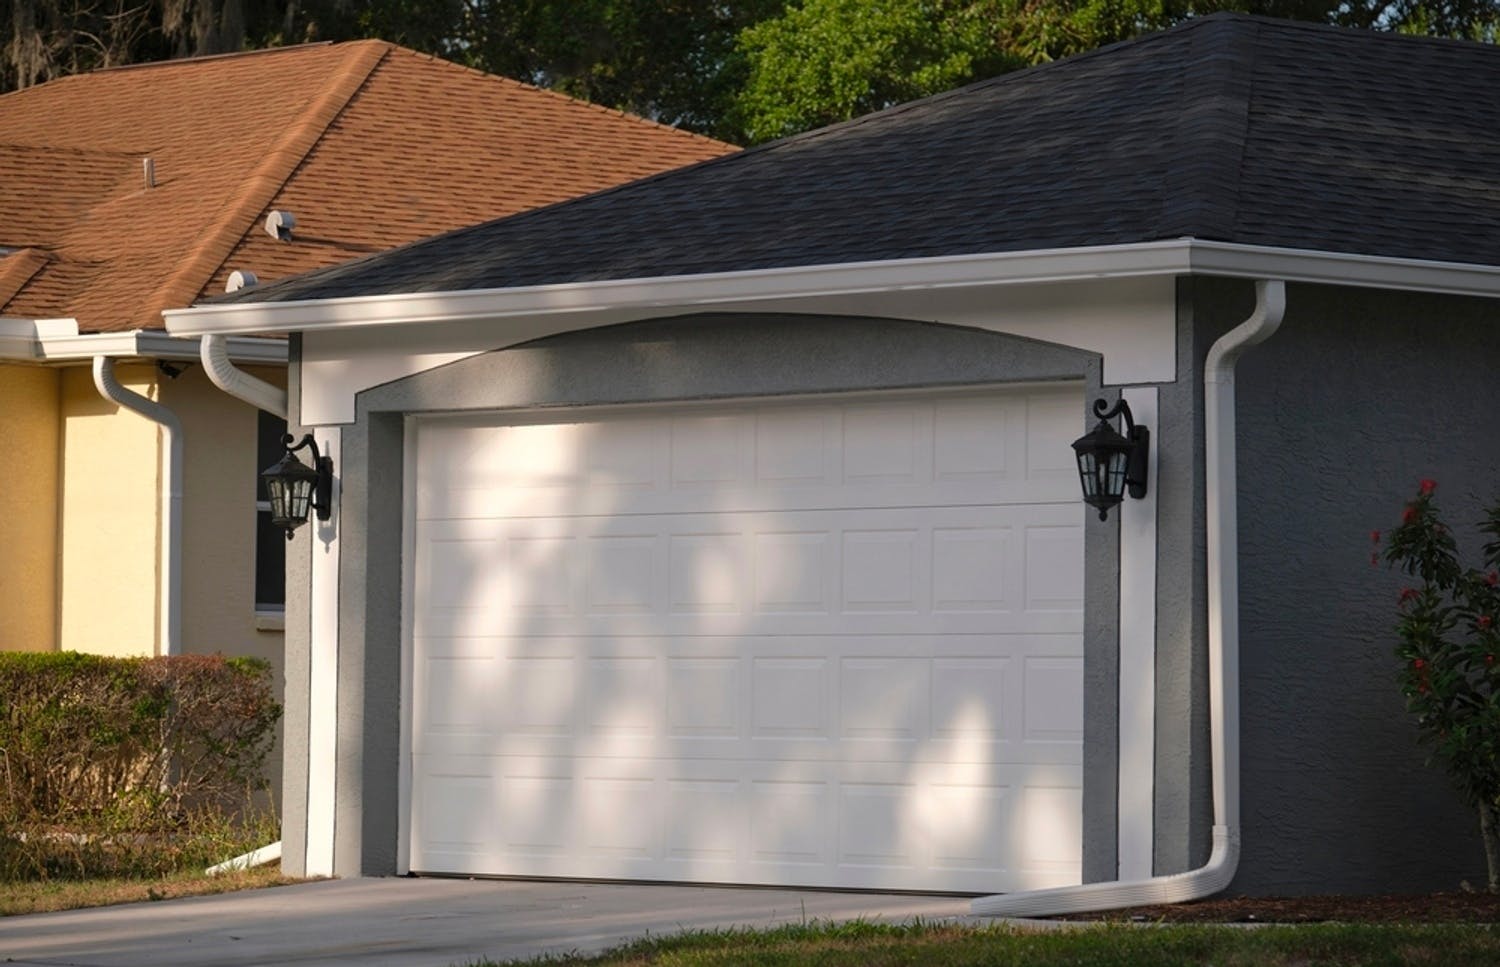 Stylish and modern new garage door